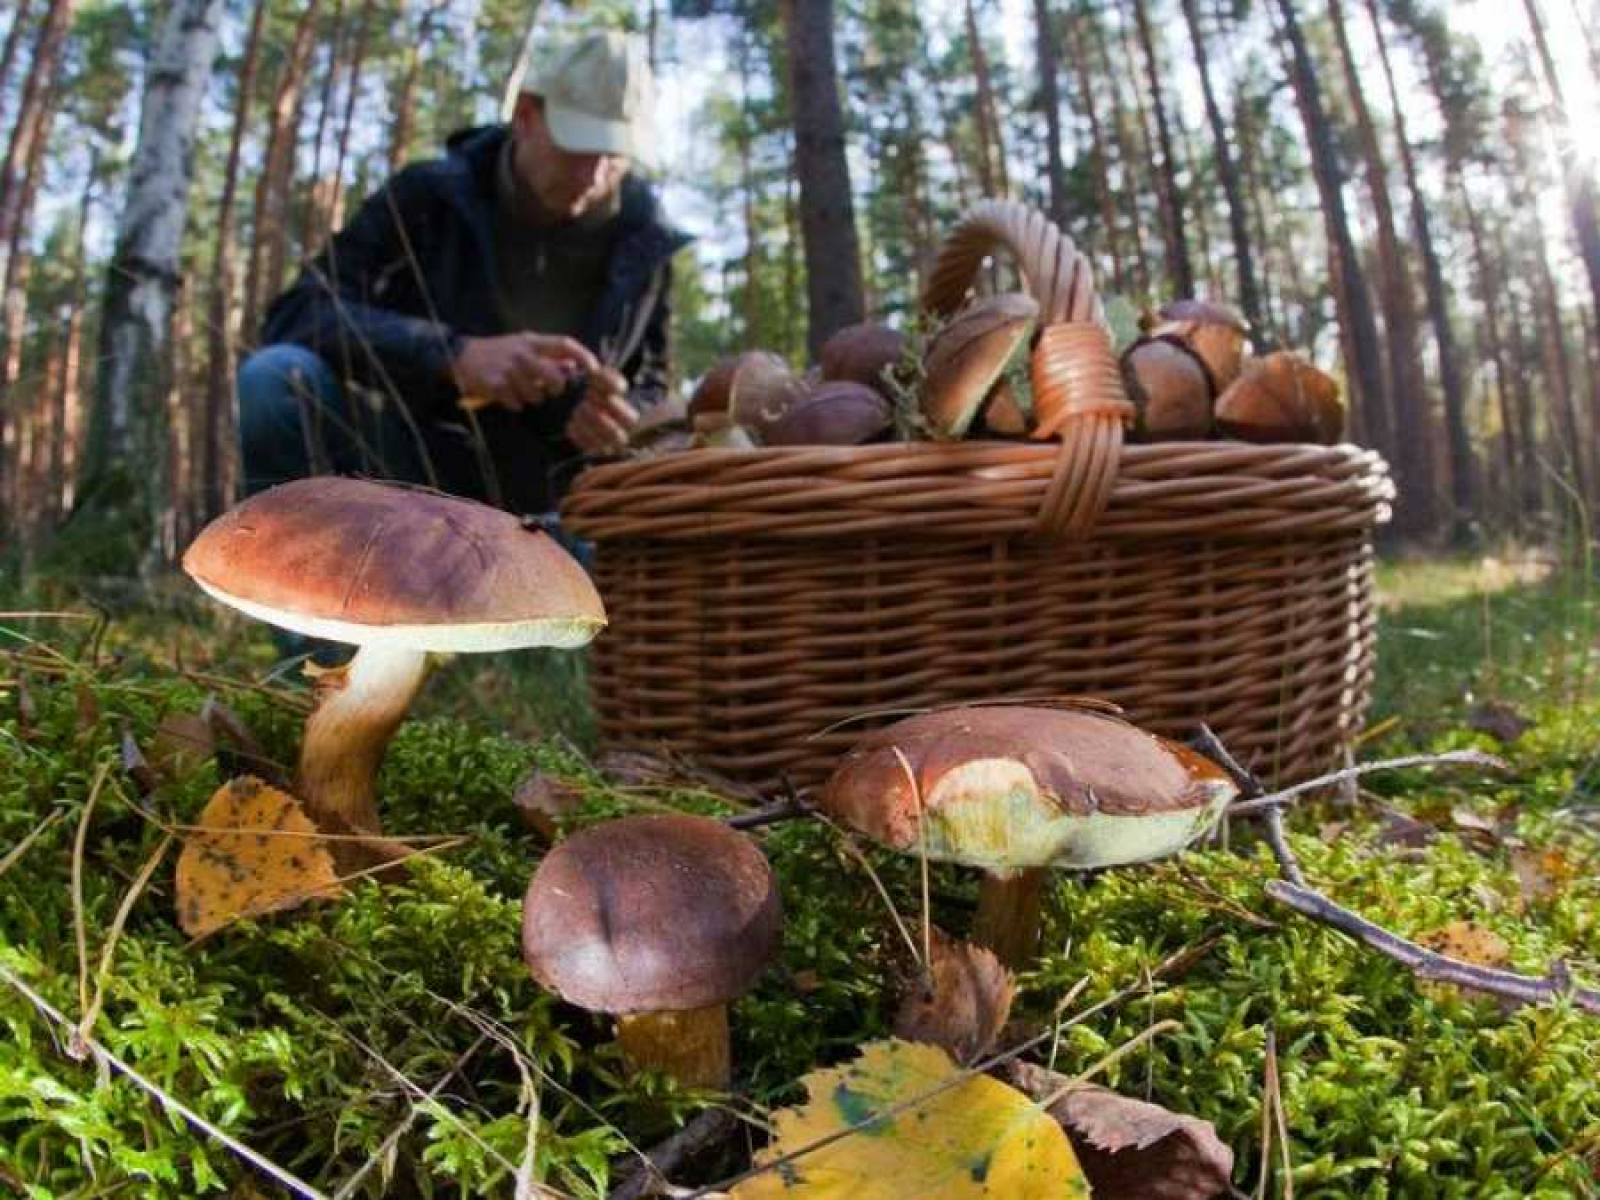 Picking mushrooms. Грибы и грибники Волгоградской области 2020. Сбор грибов. Сбор грибов в лесу. Грибной лес.